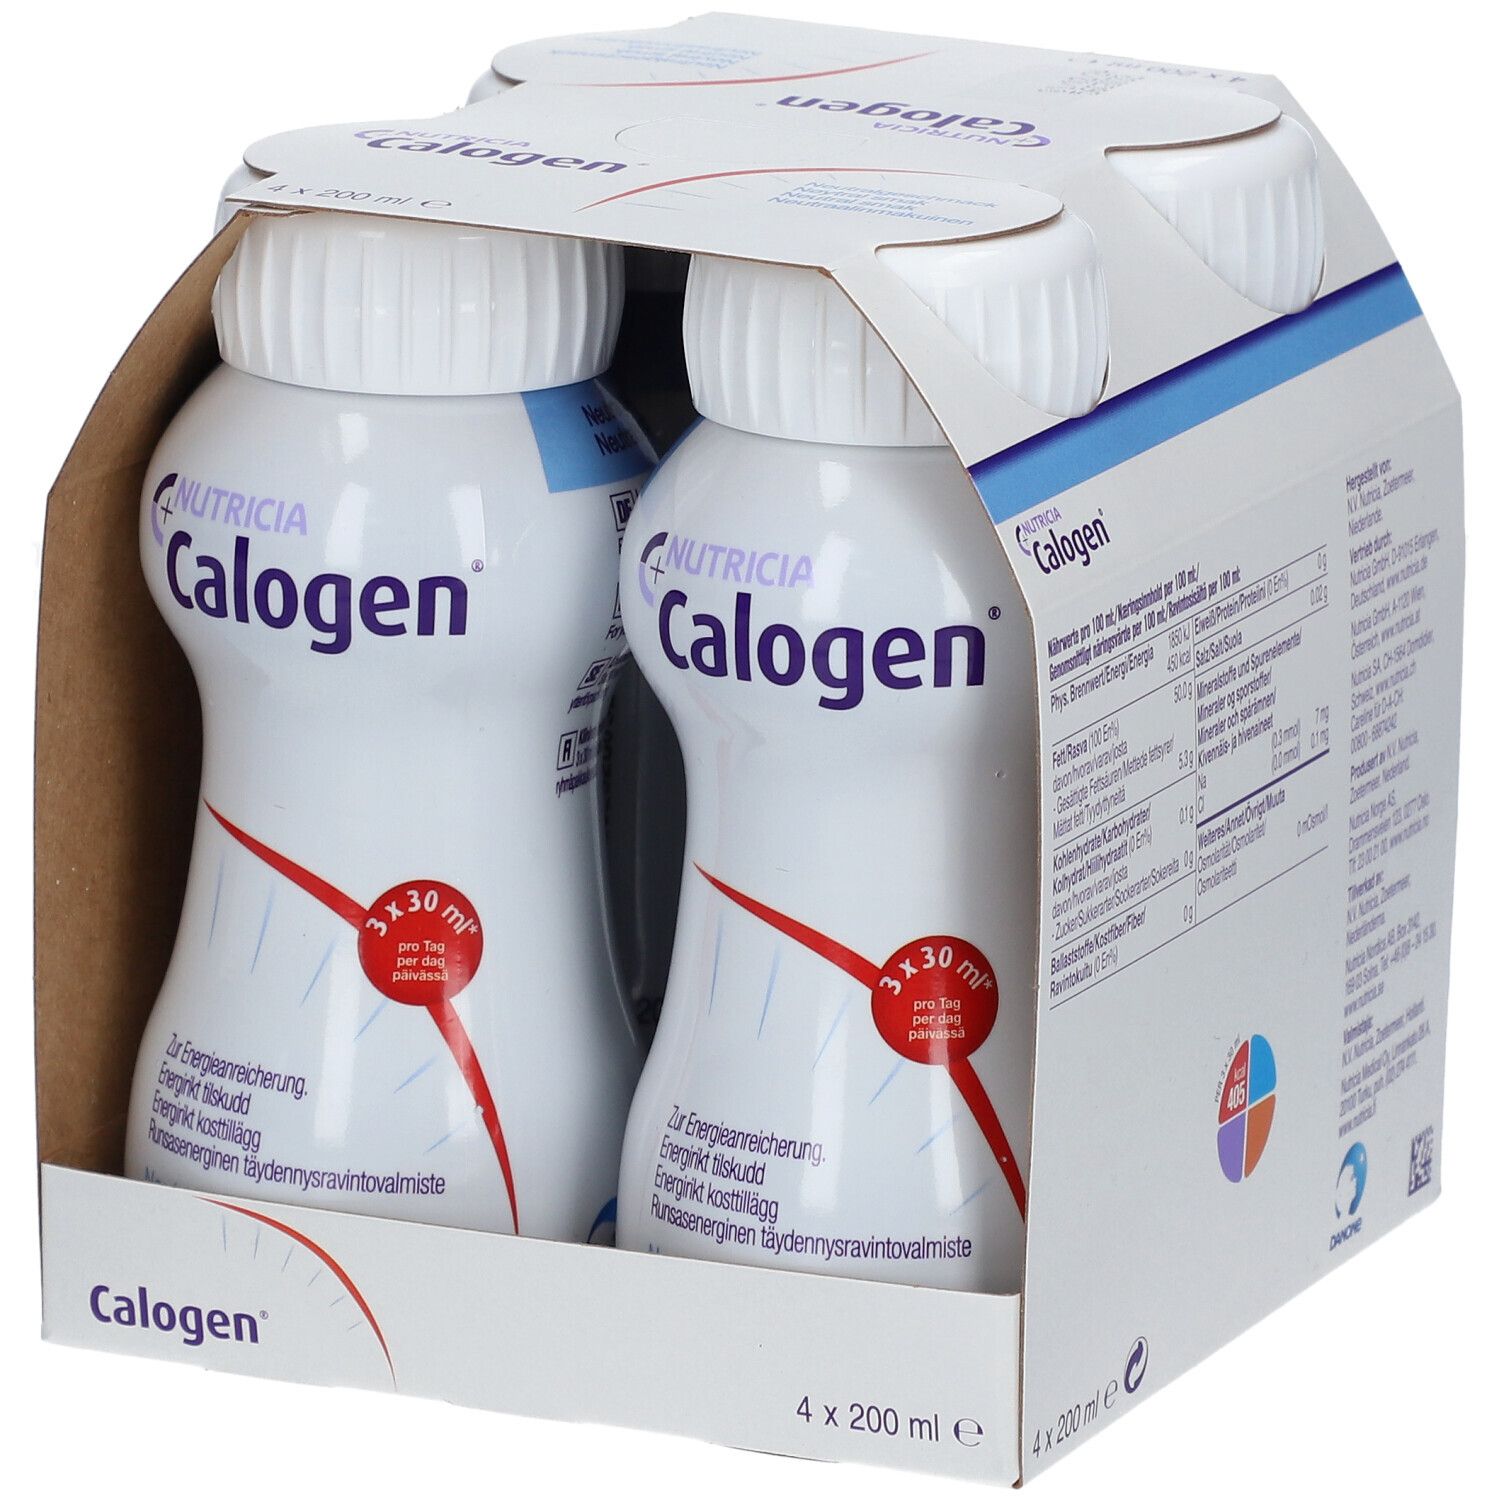 Calogen® Neutral